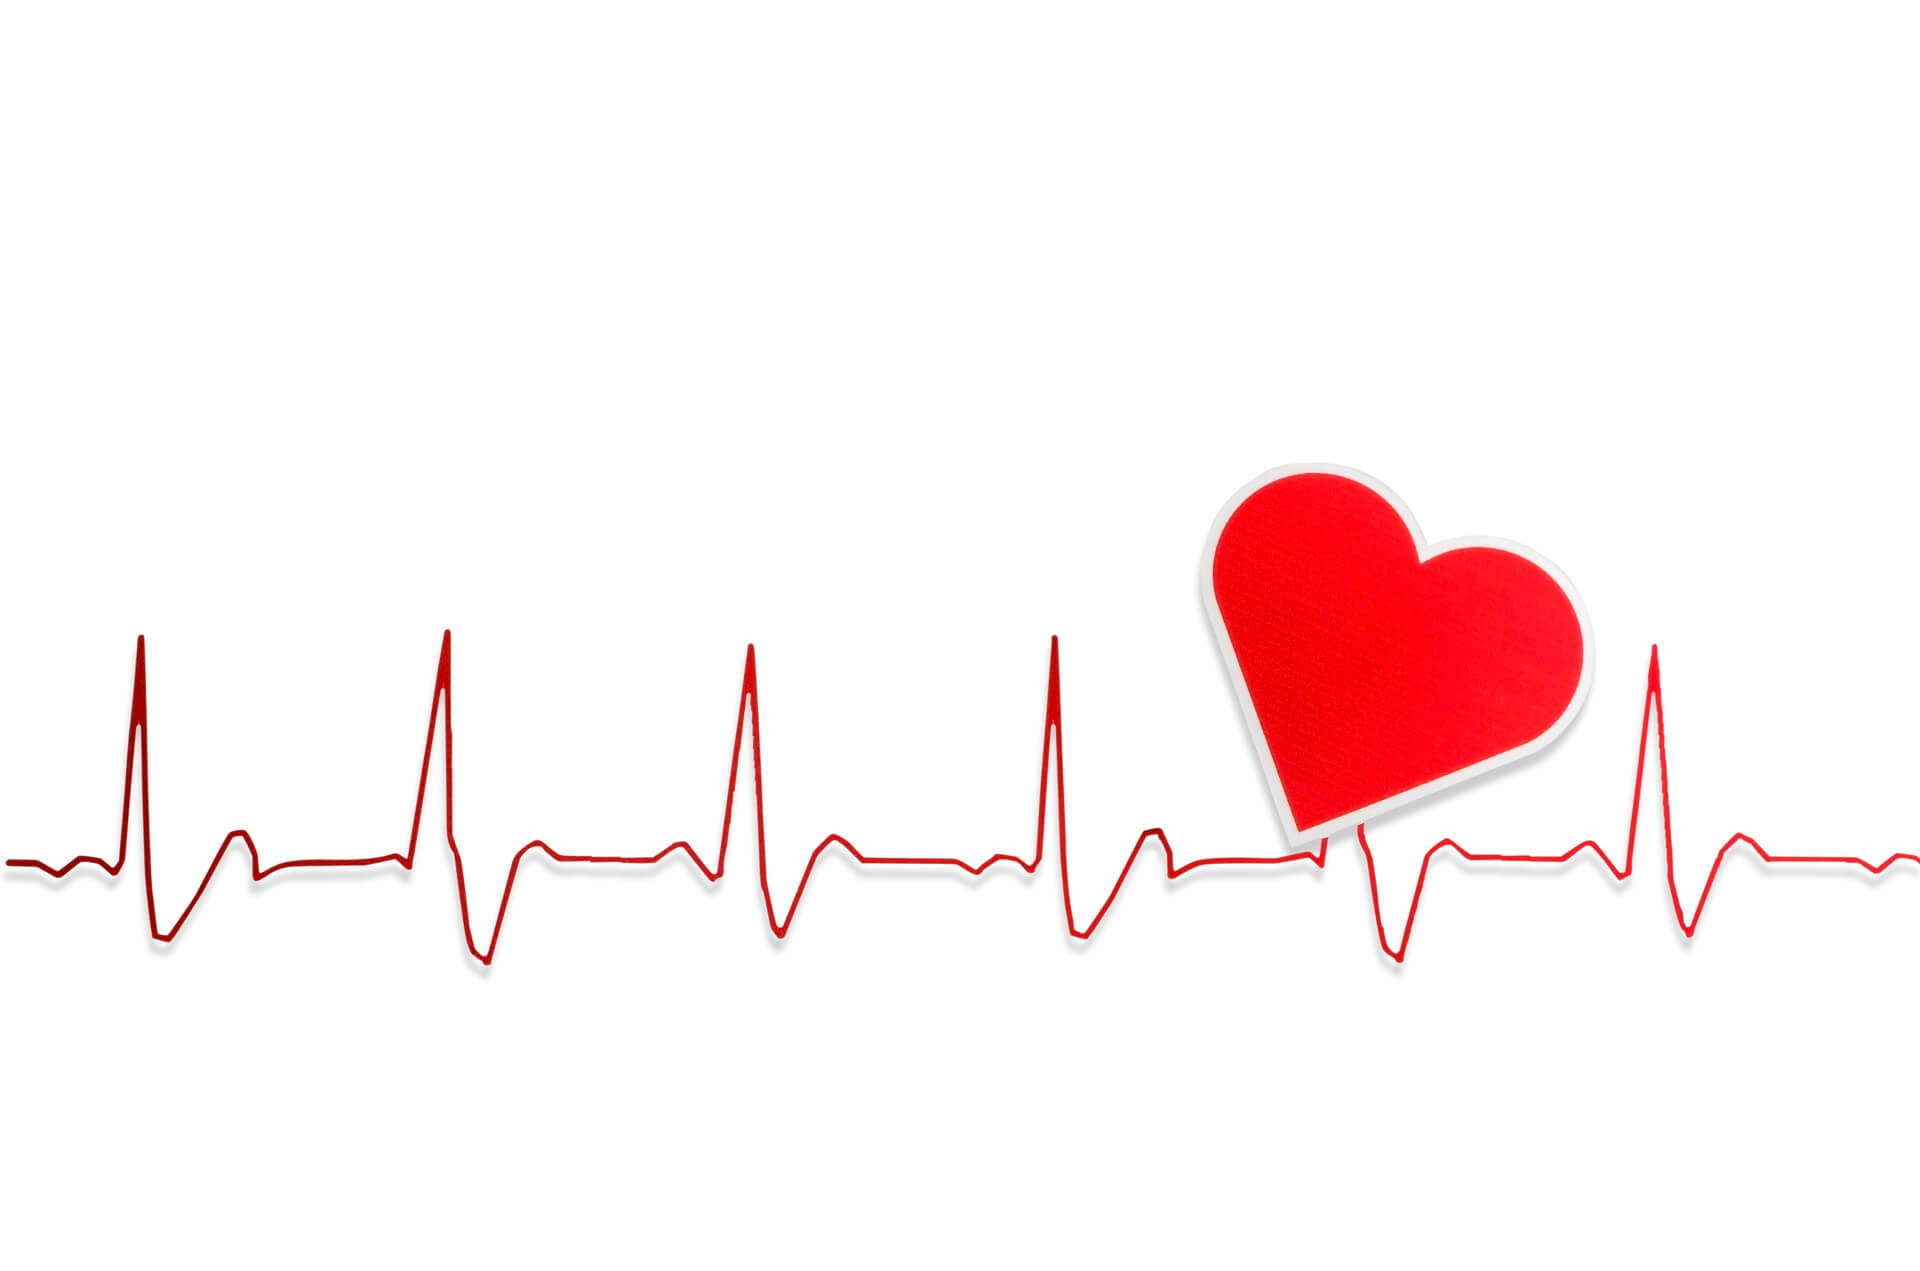 Critical illness insurance and heart attacks